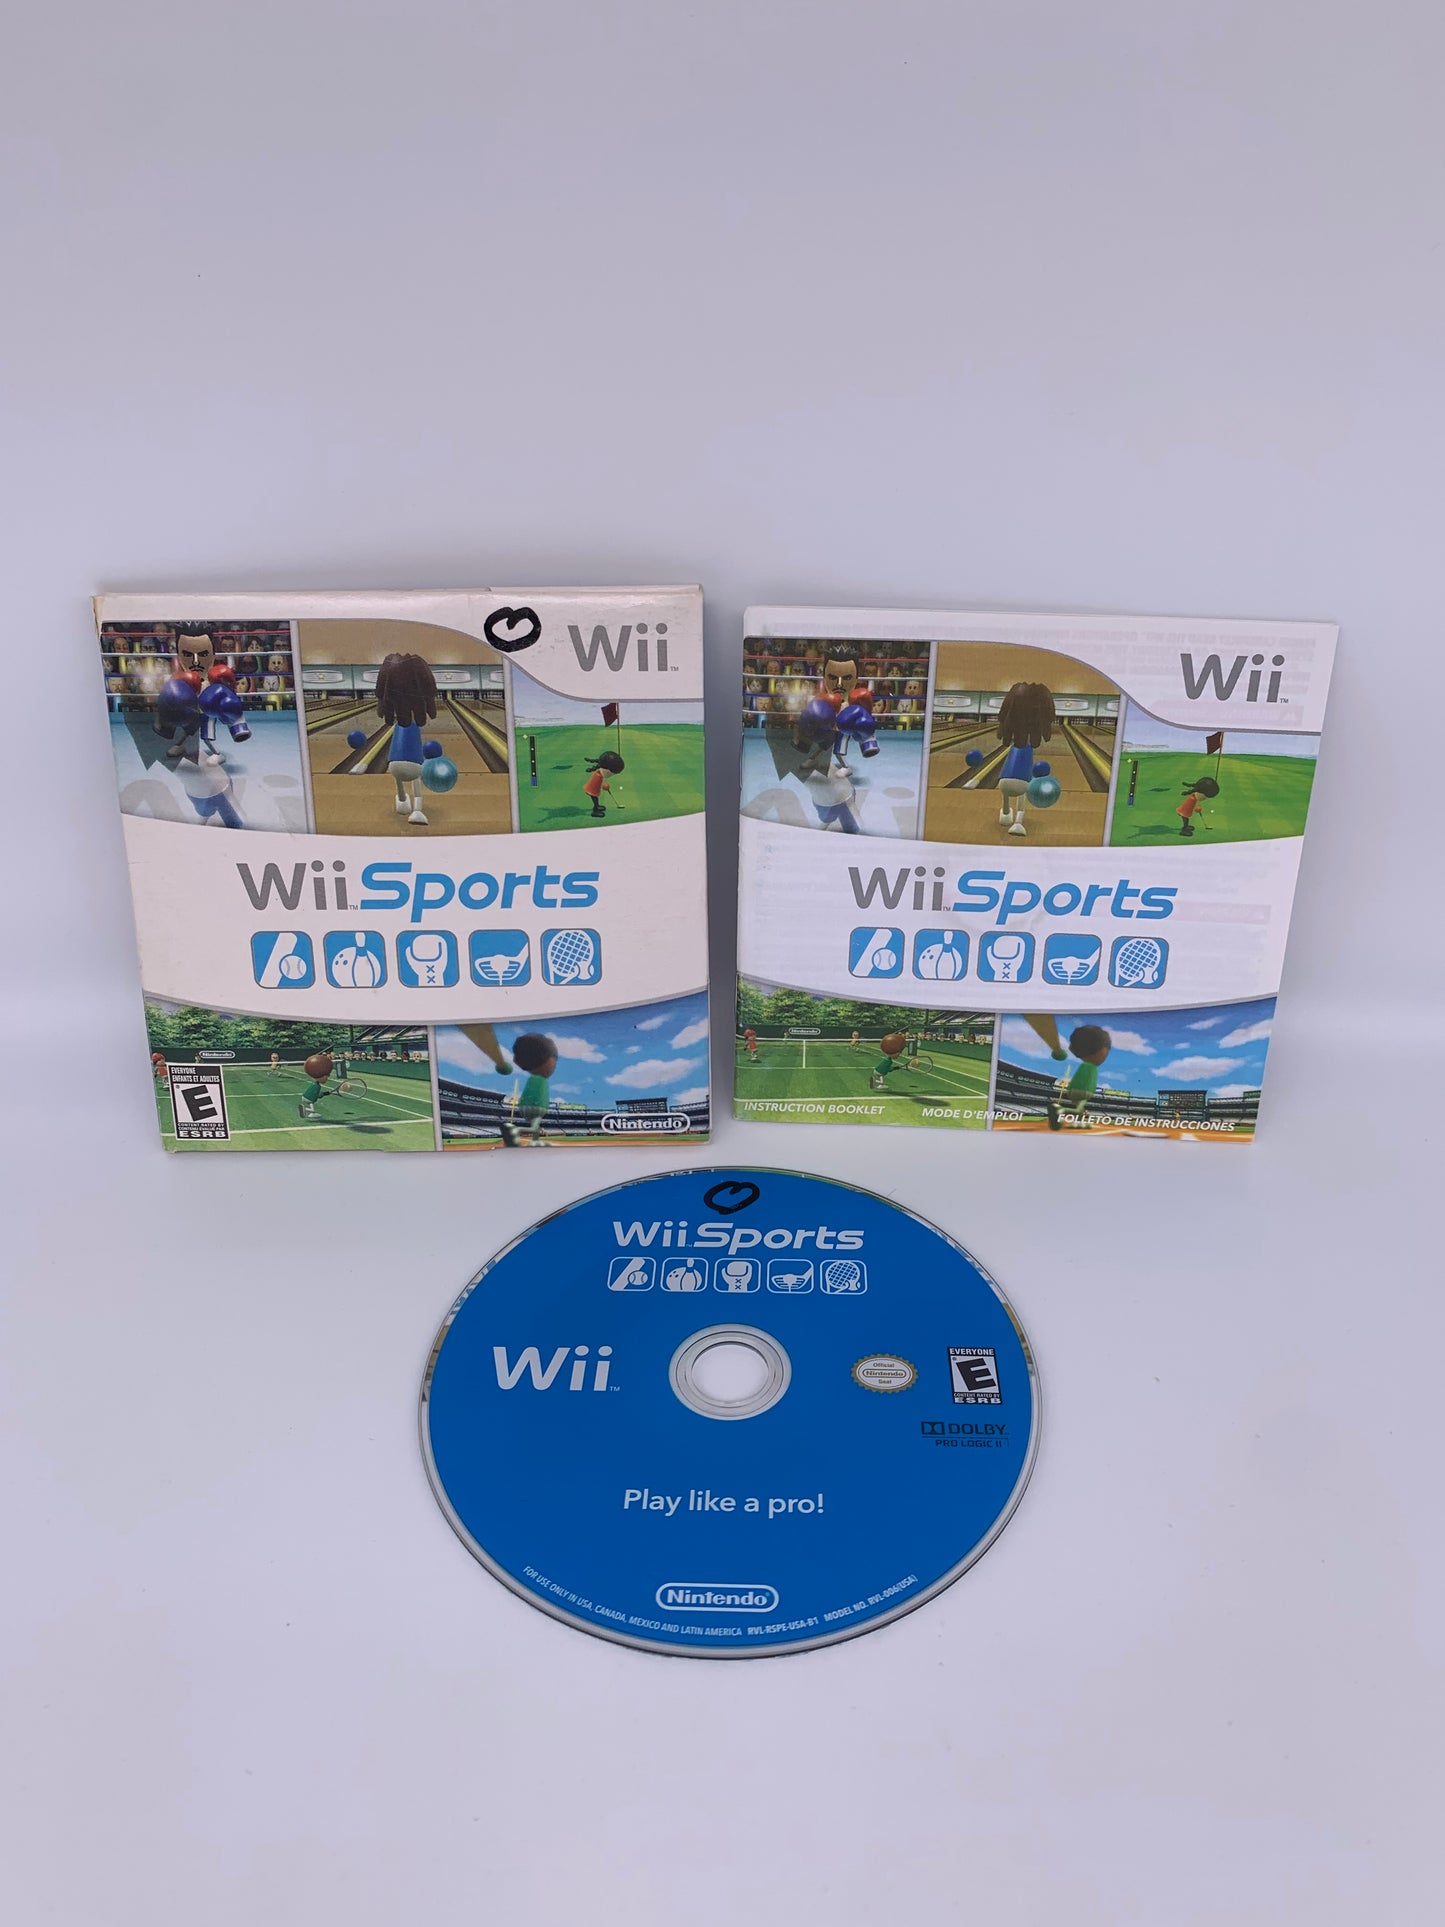 NiNTENDO Wii CONSOLE | WHITE MODEL Wii SPORTS RVL-001 (USA)